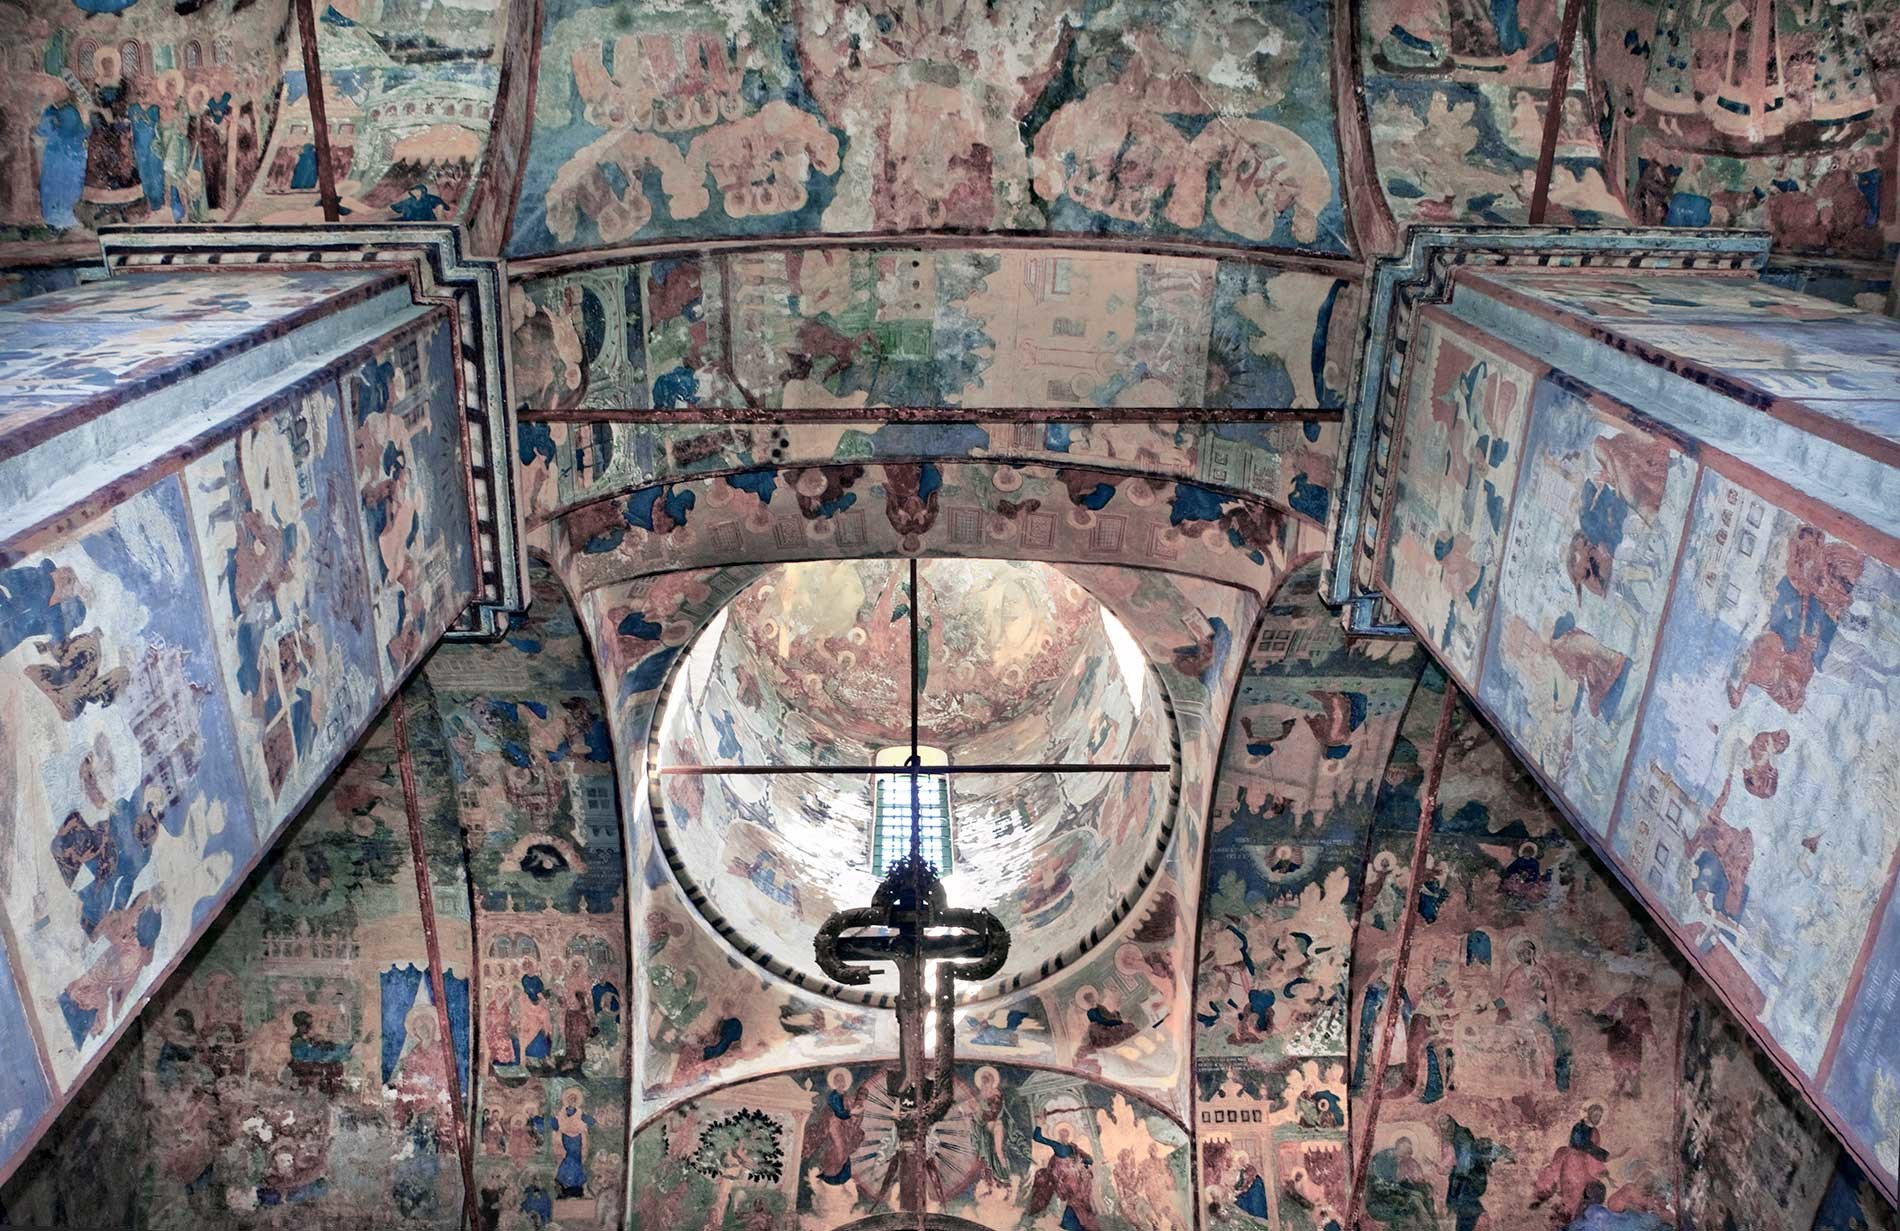 Yaroslavl. Church of St. John Chrysostom at Korovniki. Interior. West piers and central dome. Aug. 15, 2017.